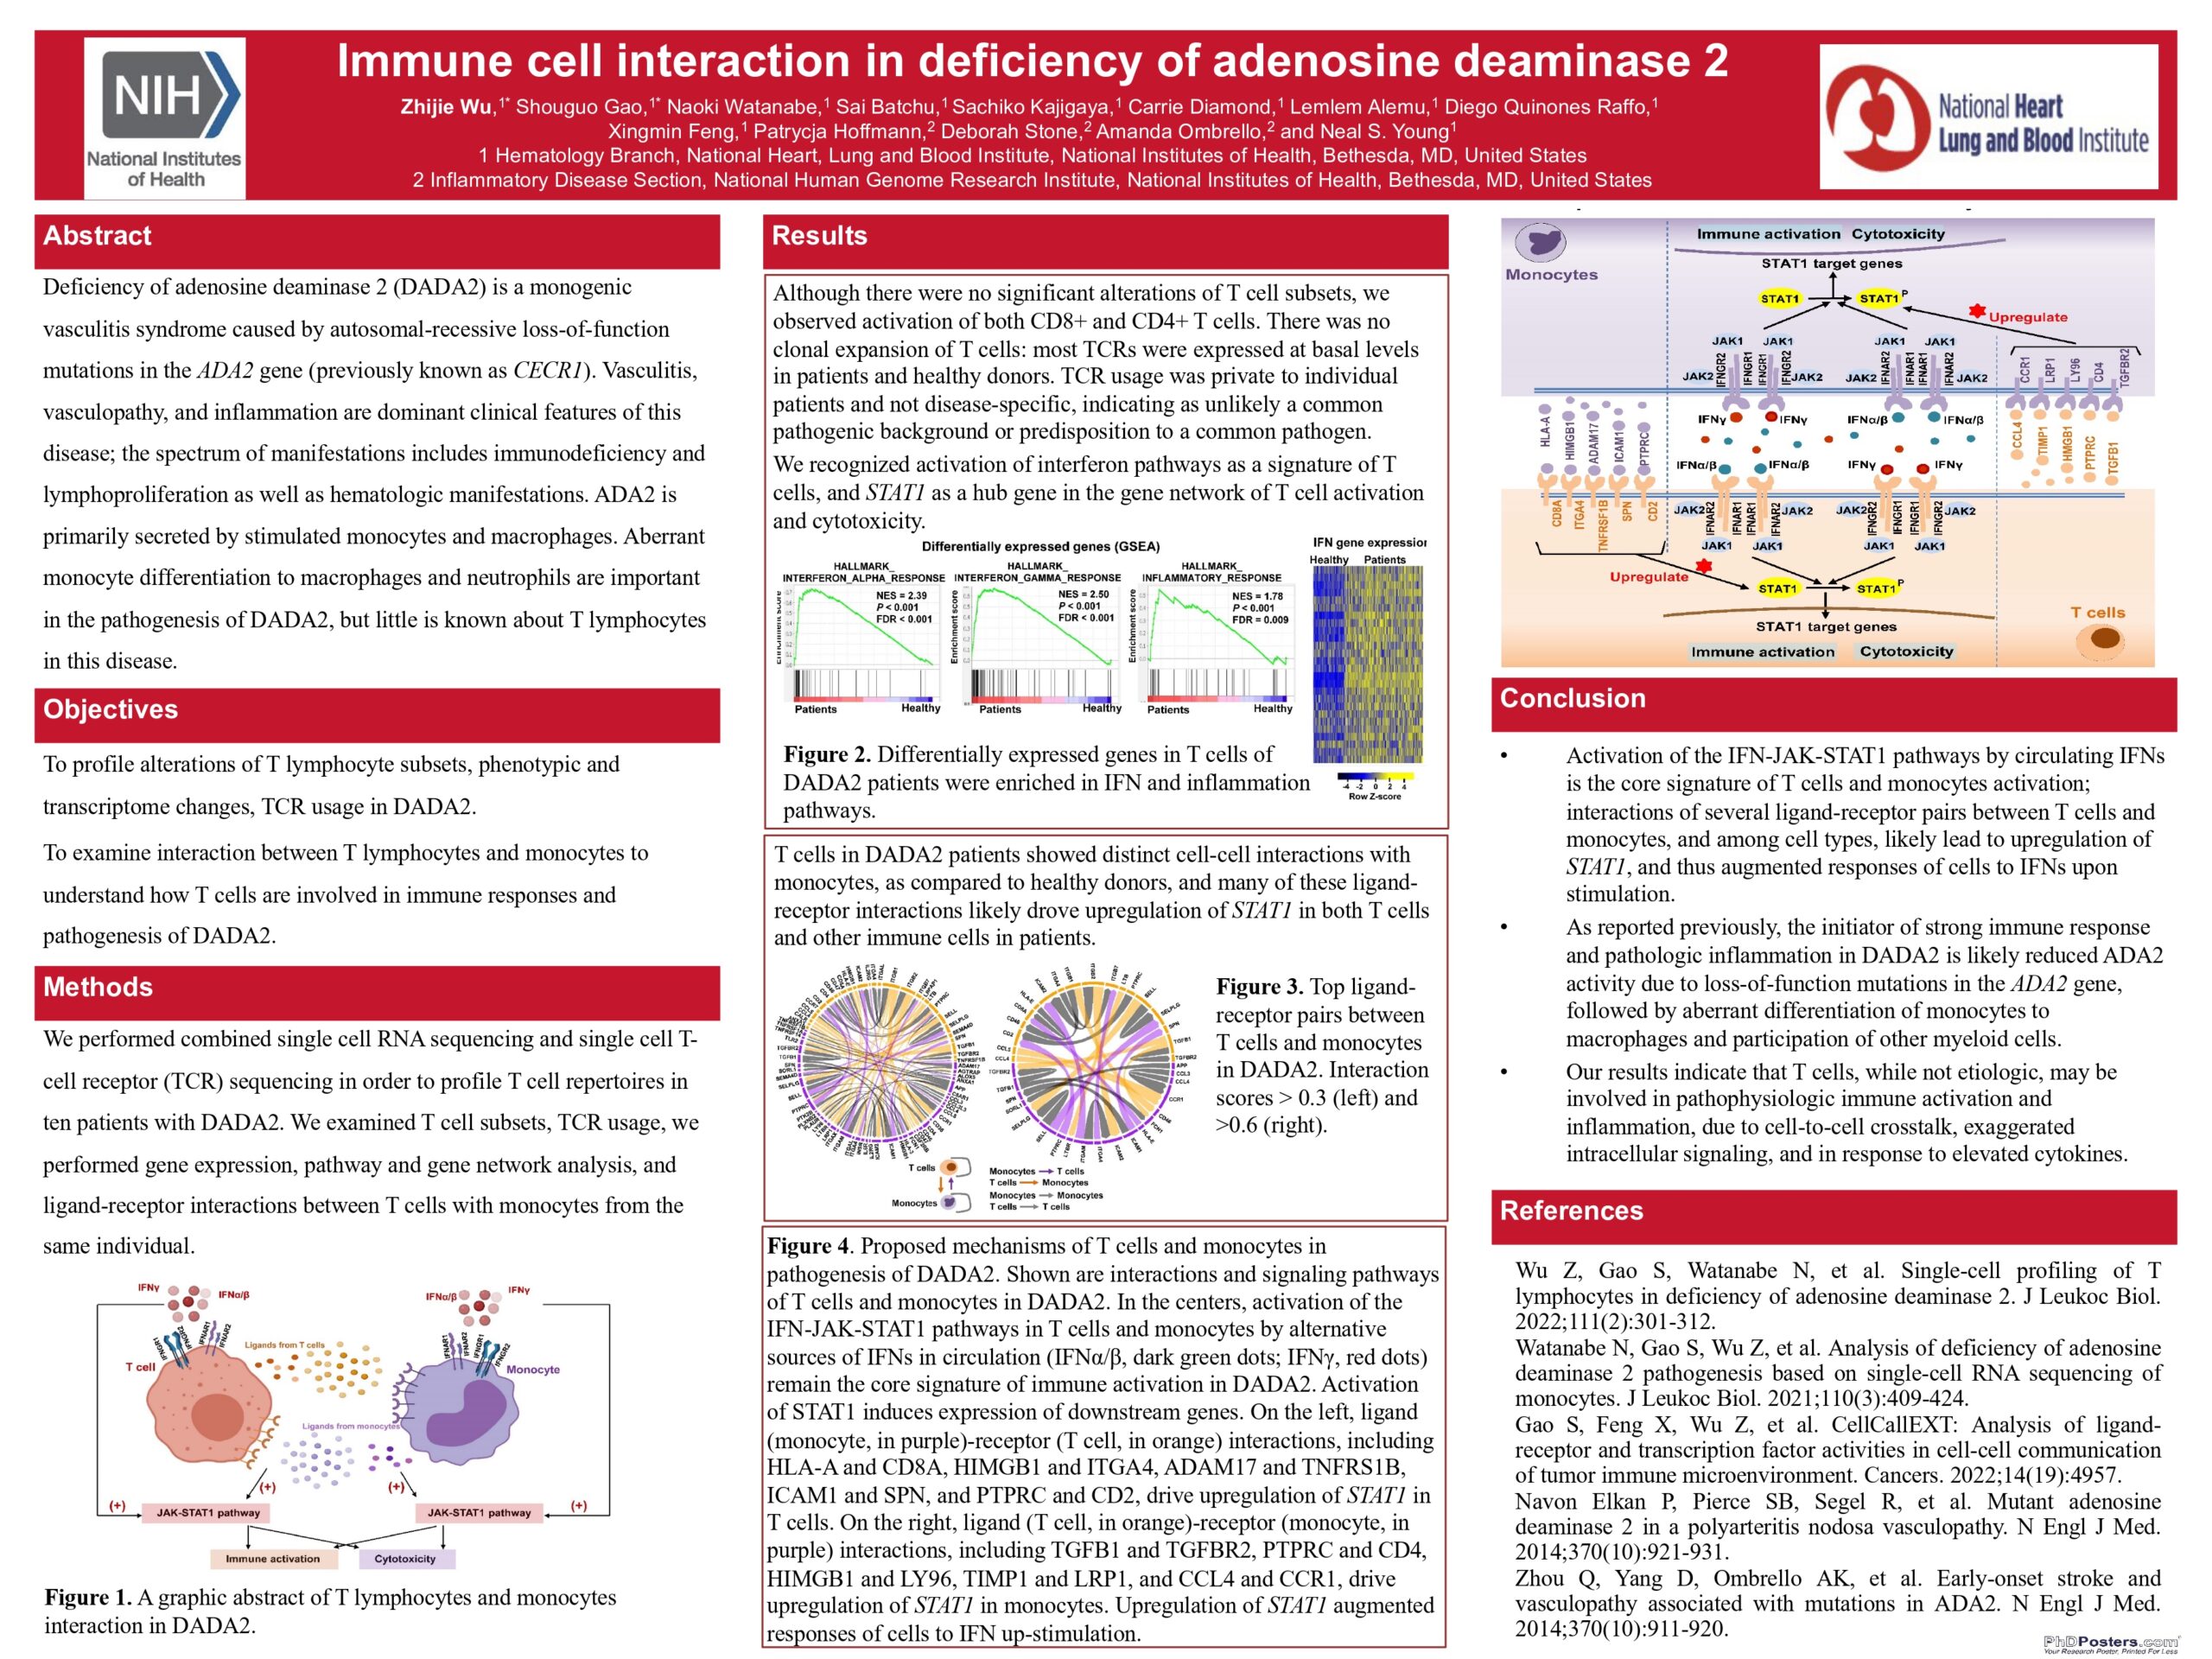 Zhijie Wu - Immune cell interaction in deficiency of adenosine deaminase 2